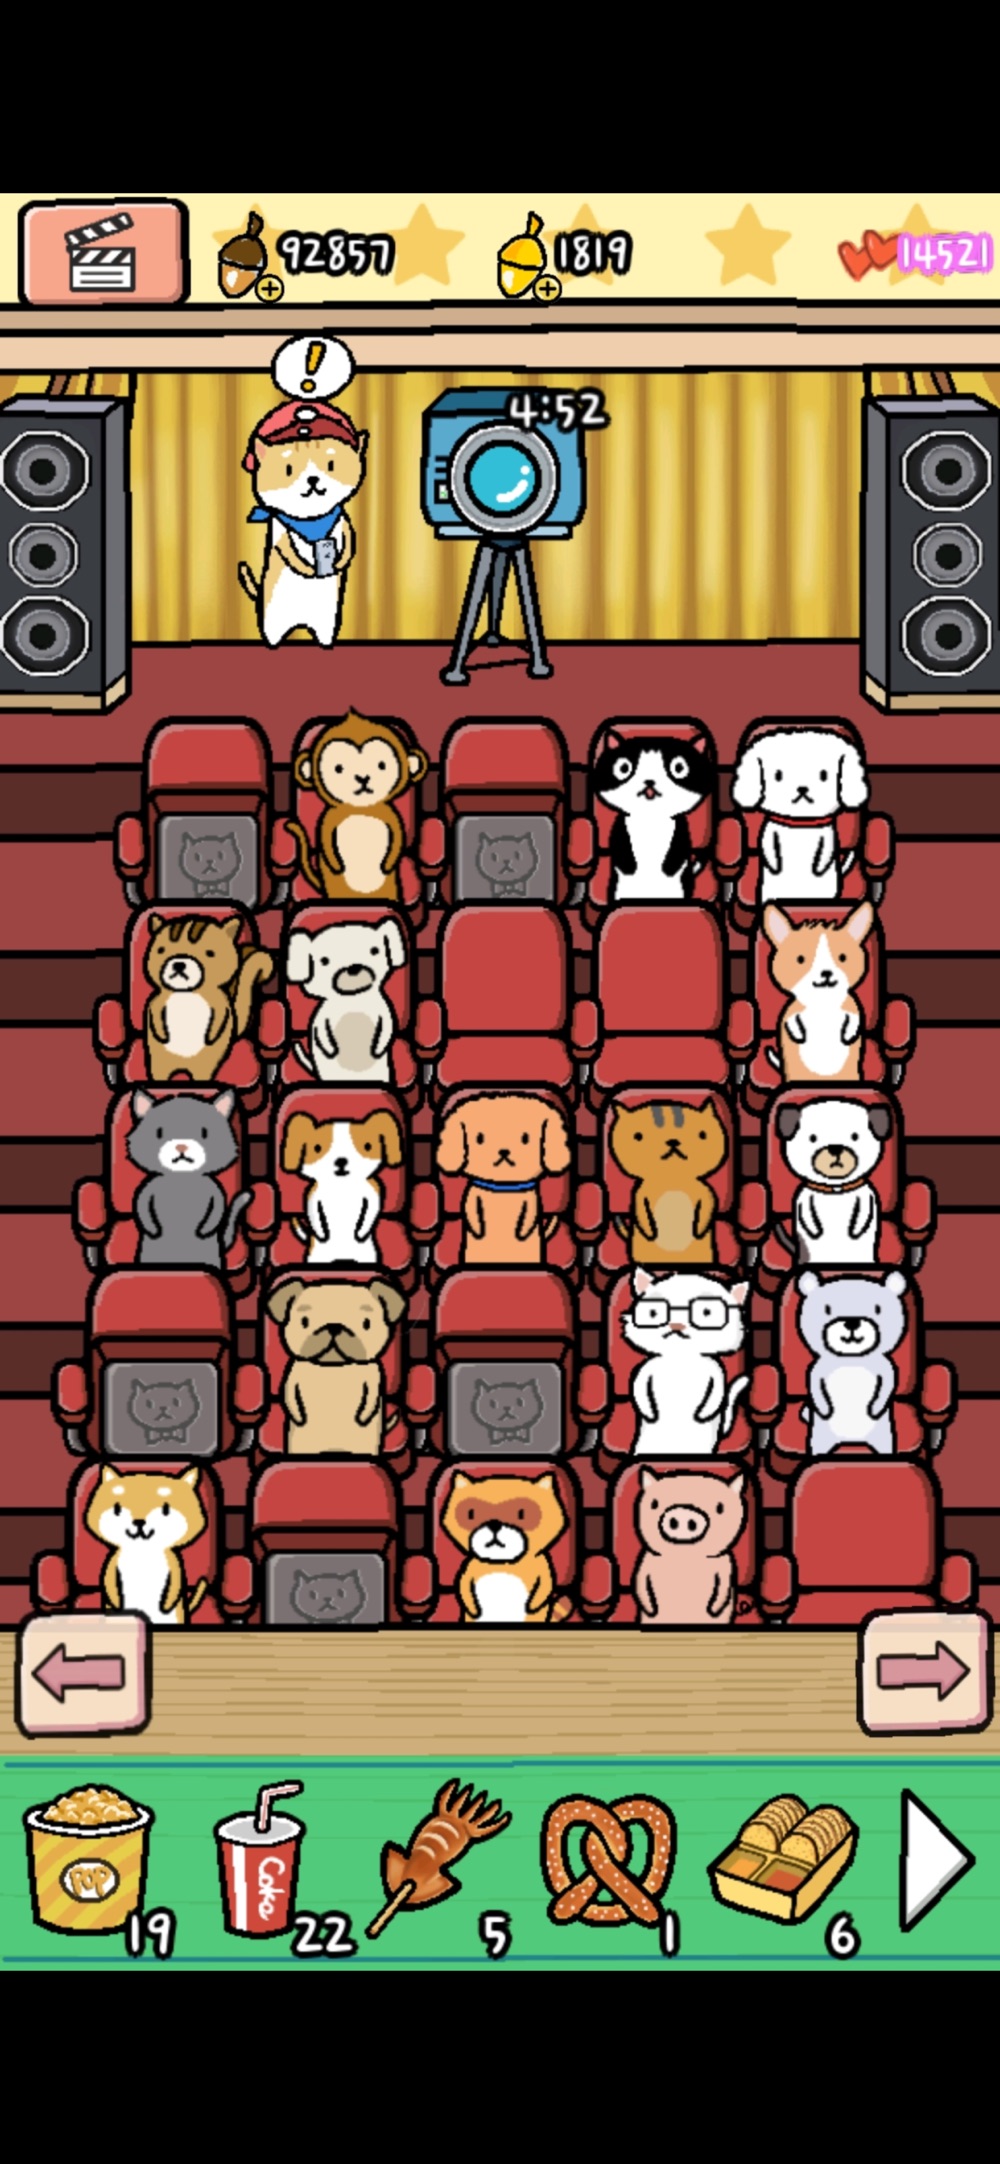 Animal Cinema